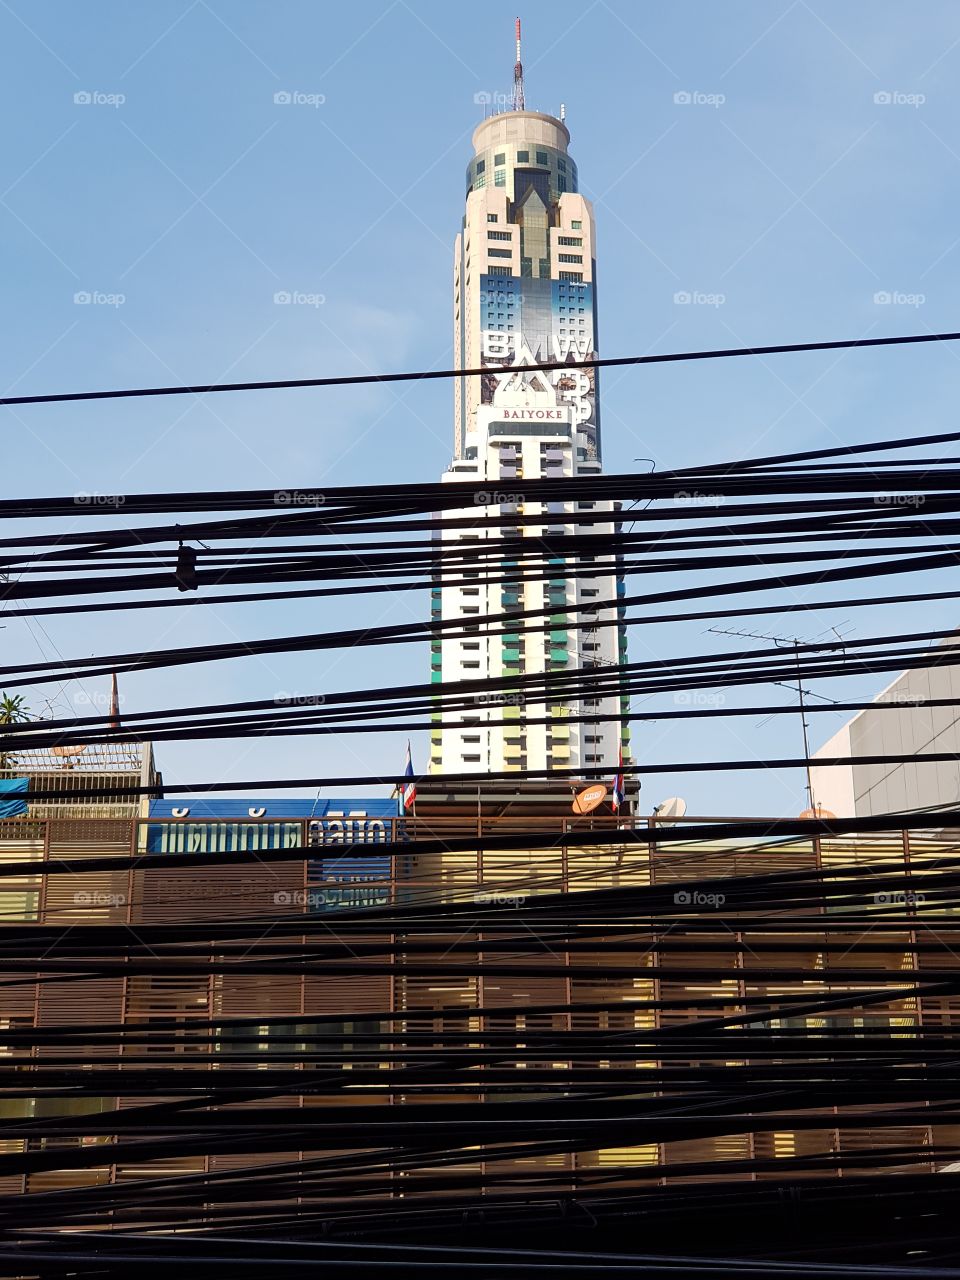 Bangkok through wires.